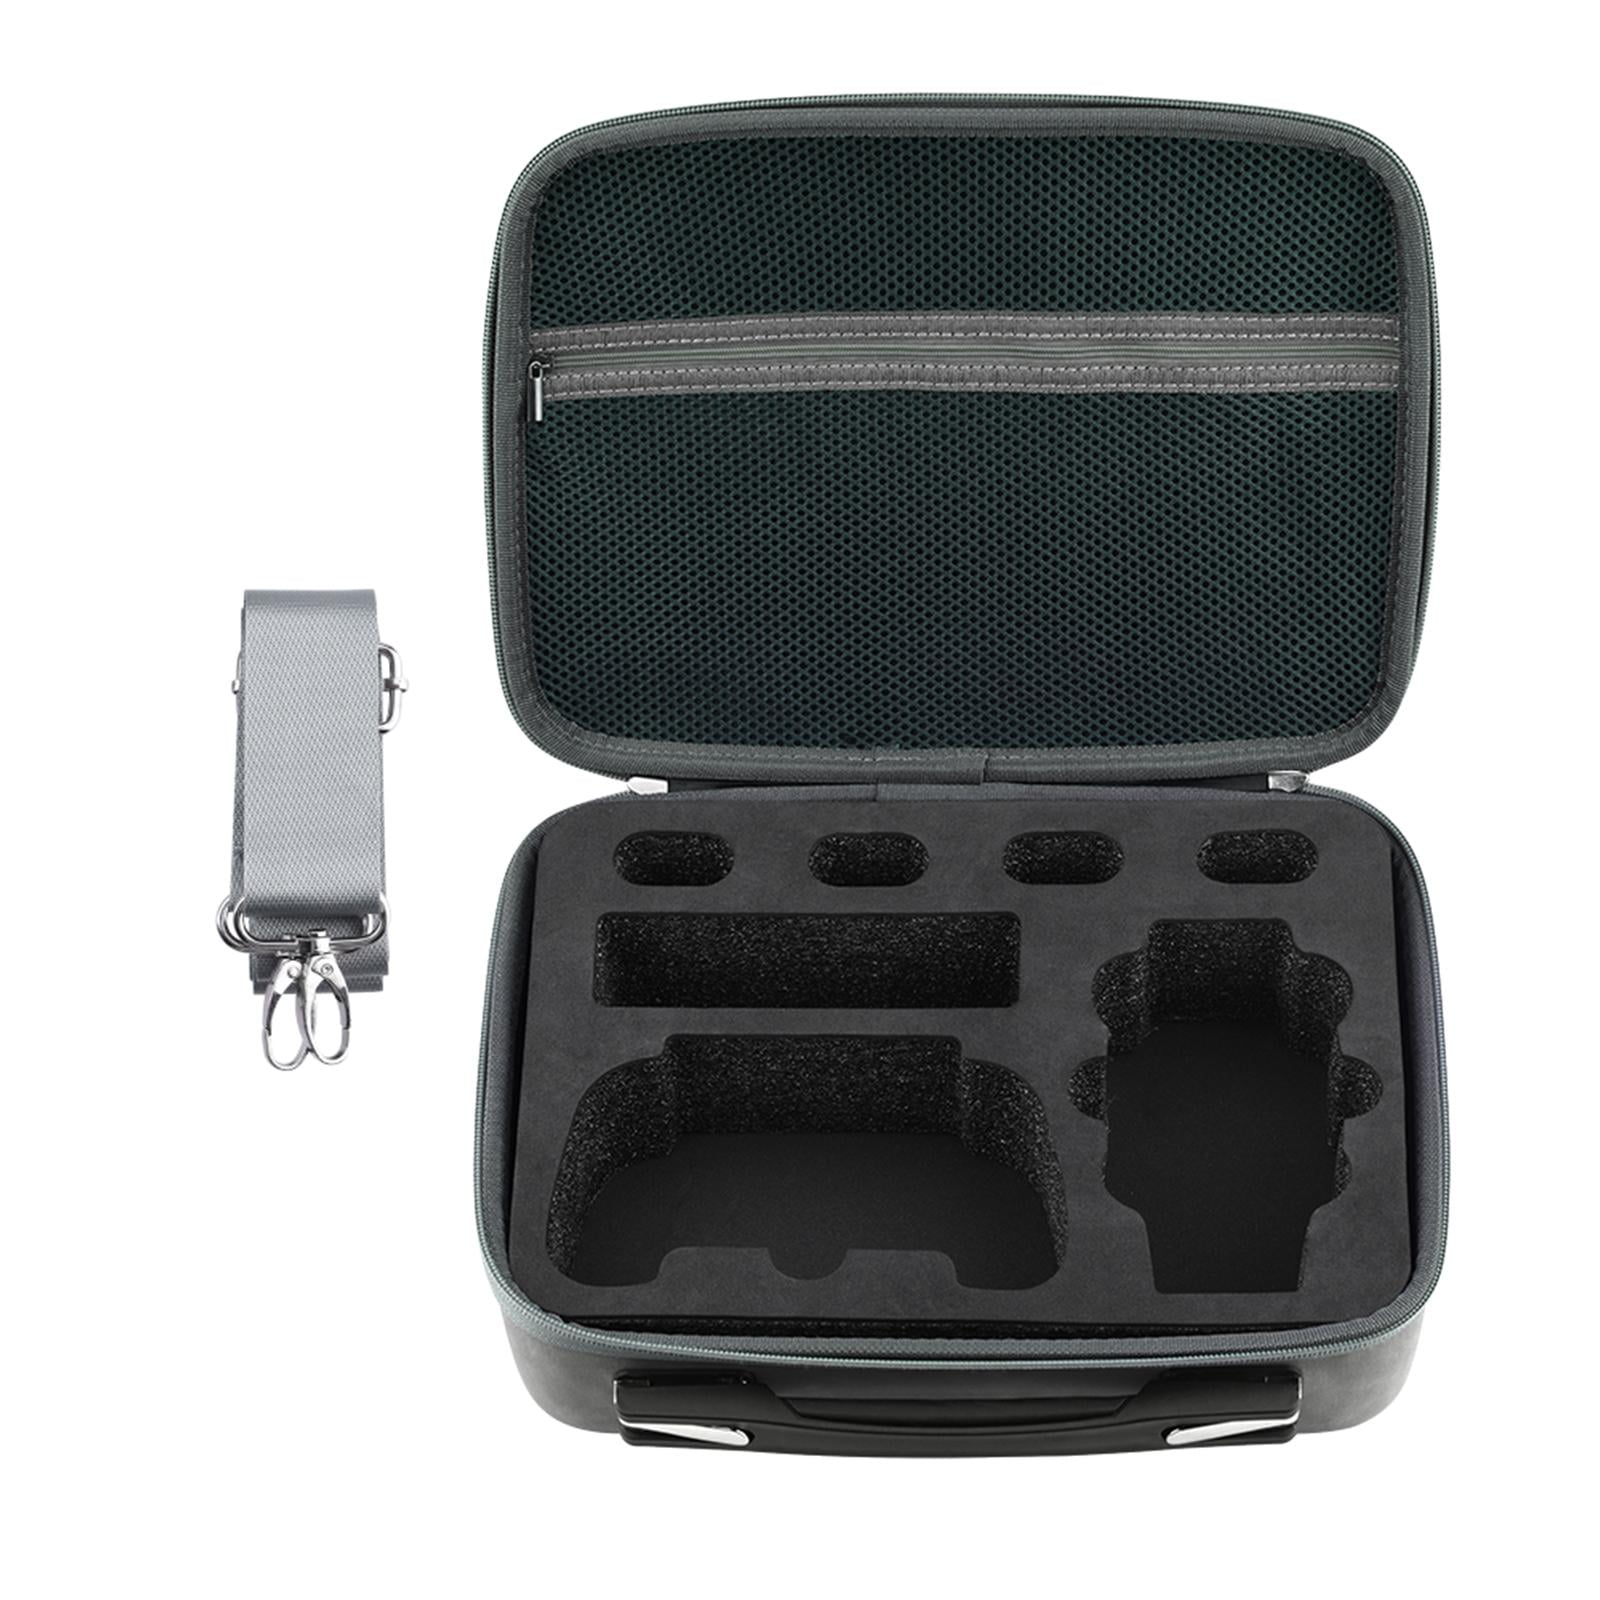 Hard Shell Waterproof Carrying Case Storage Box Handbag for Eachine E58 RC Drone 